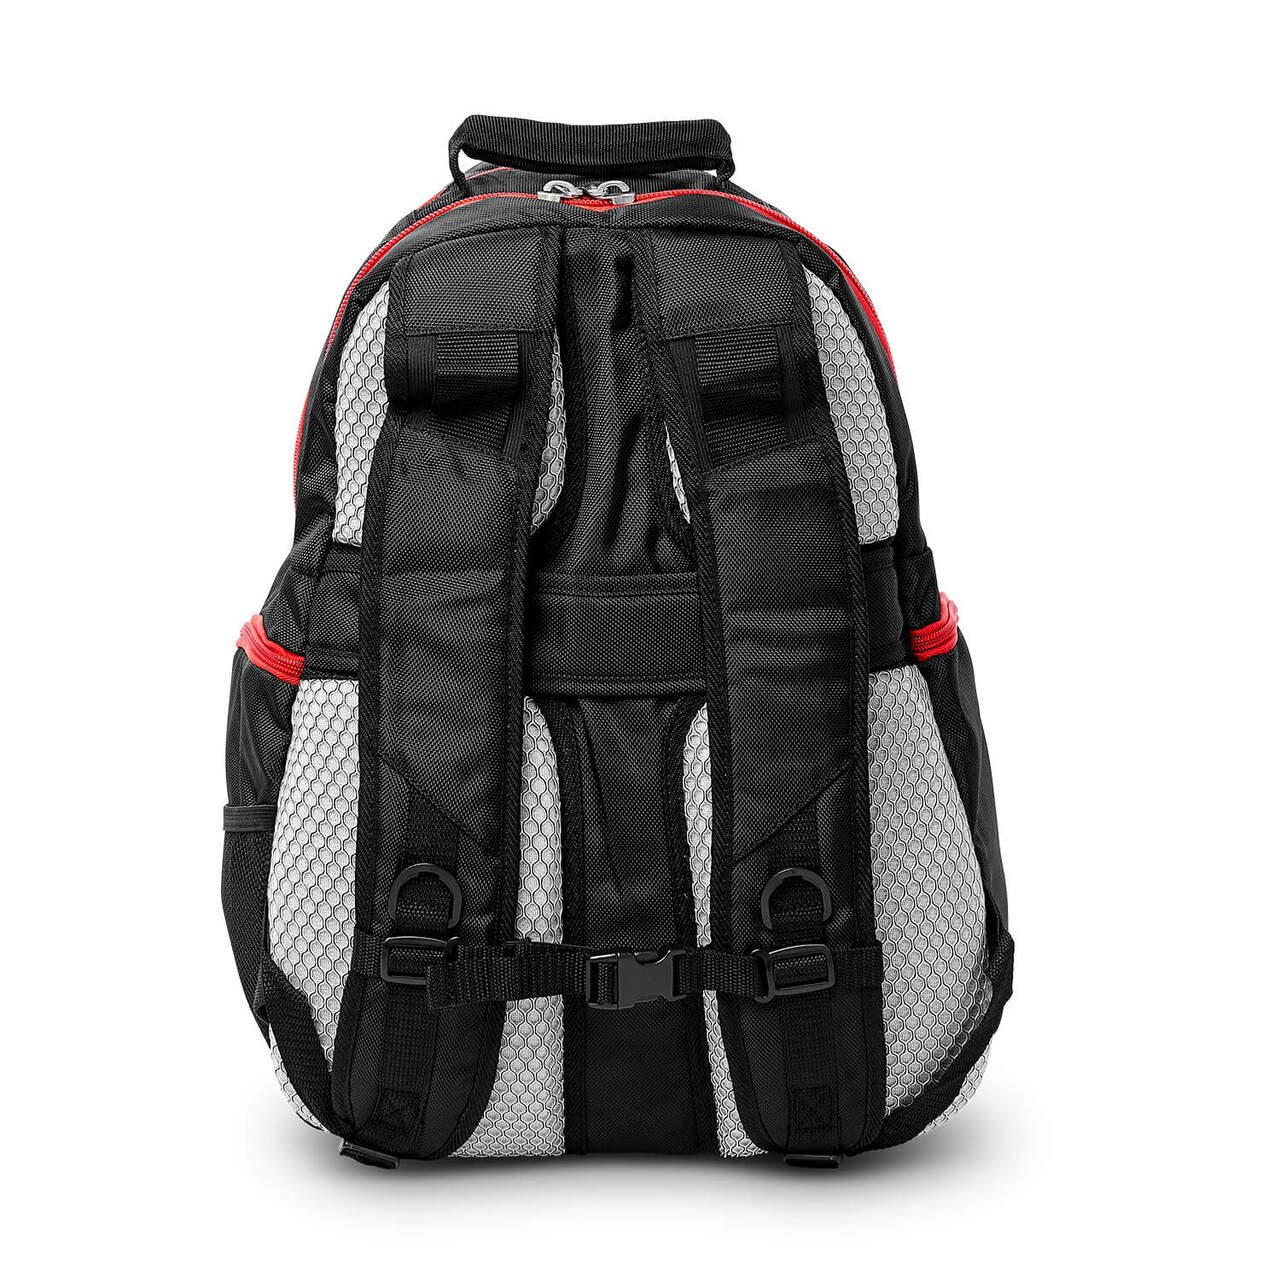 Texans Backpack | Houston Texans Laptop Backpack